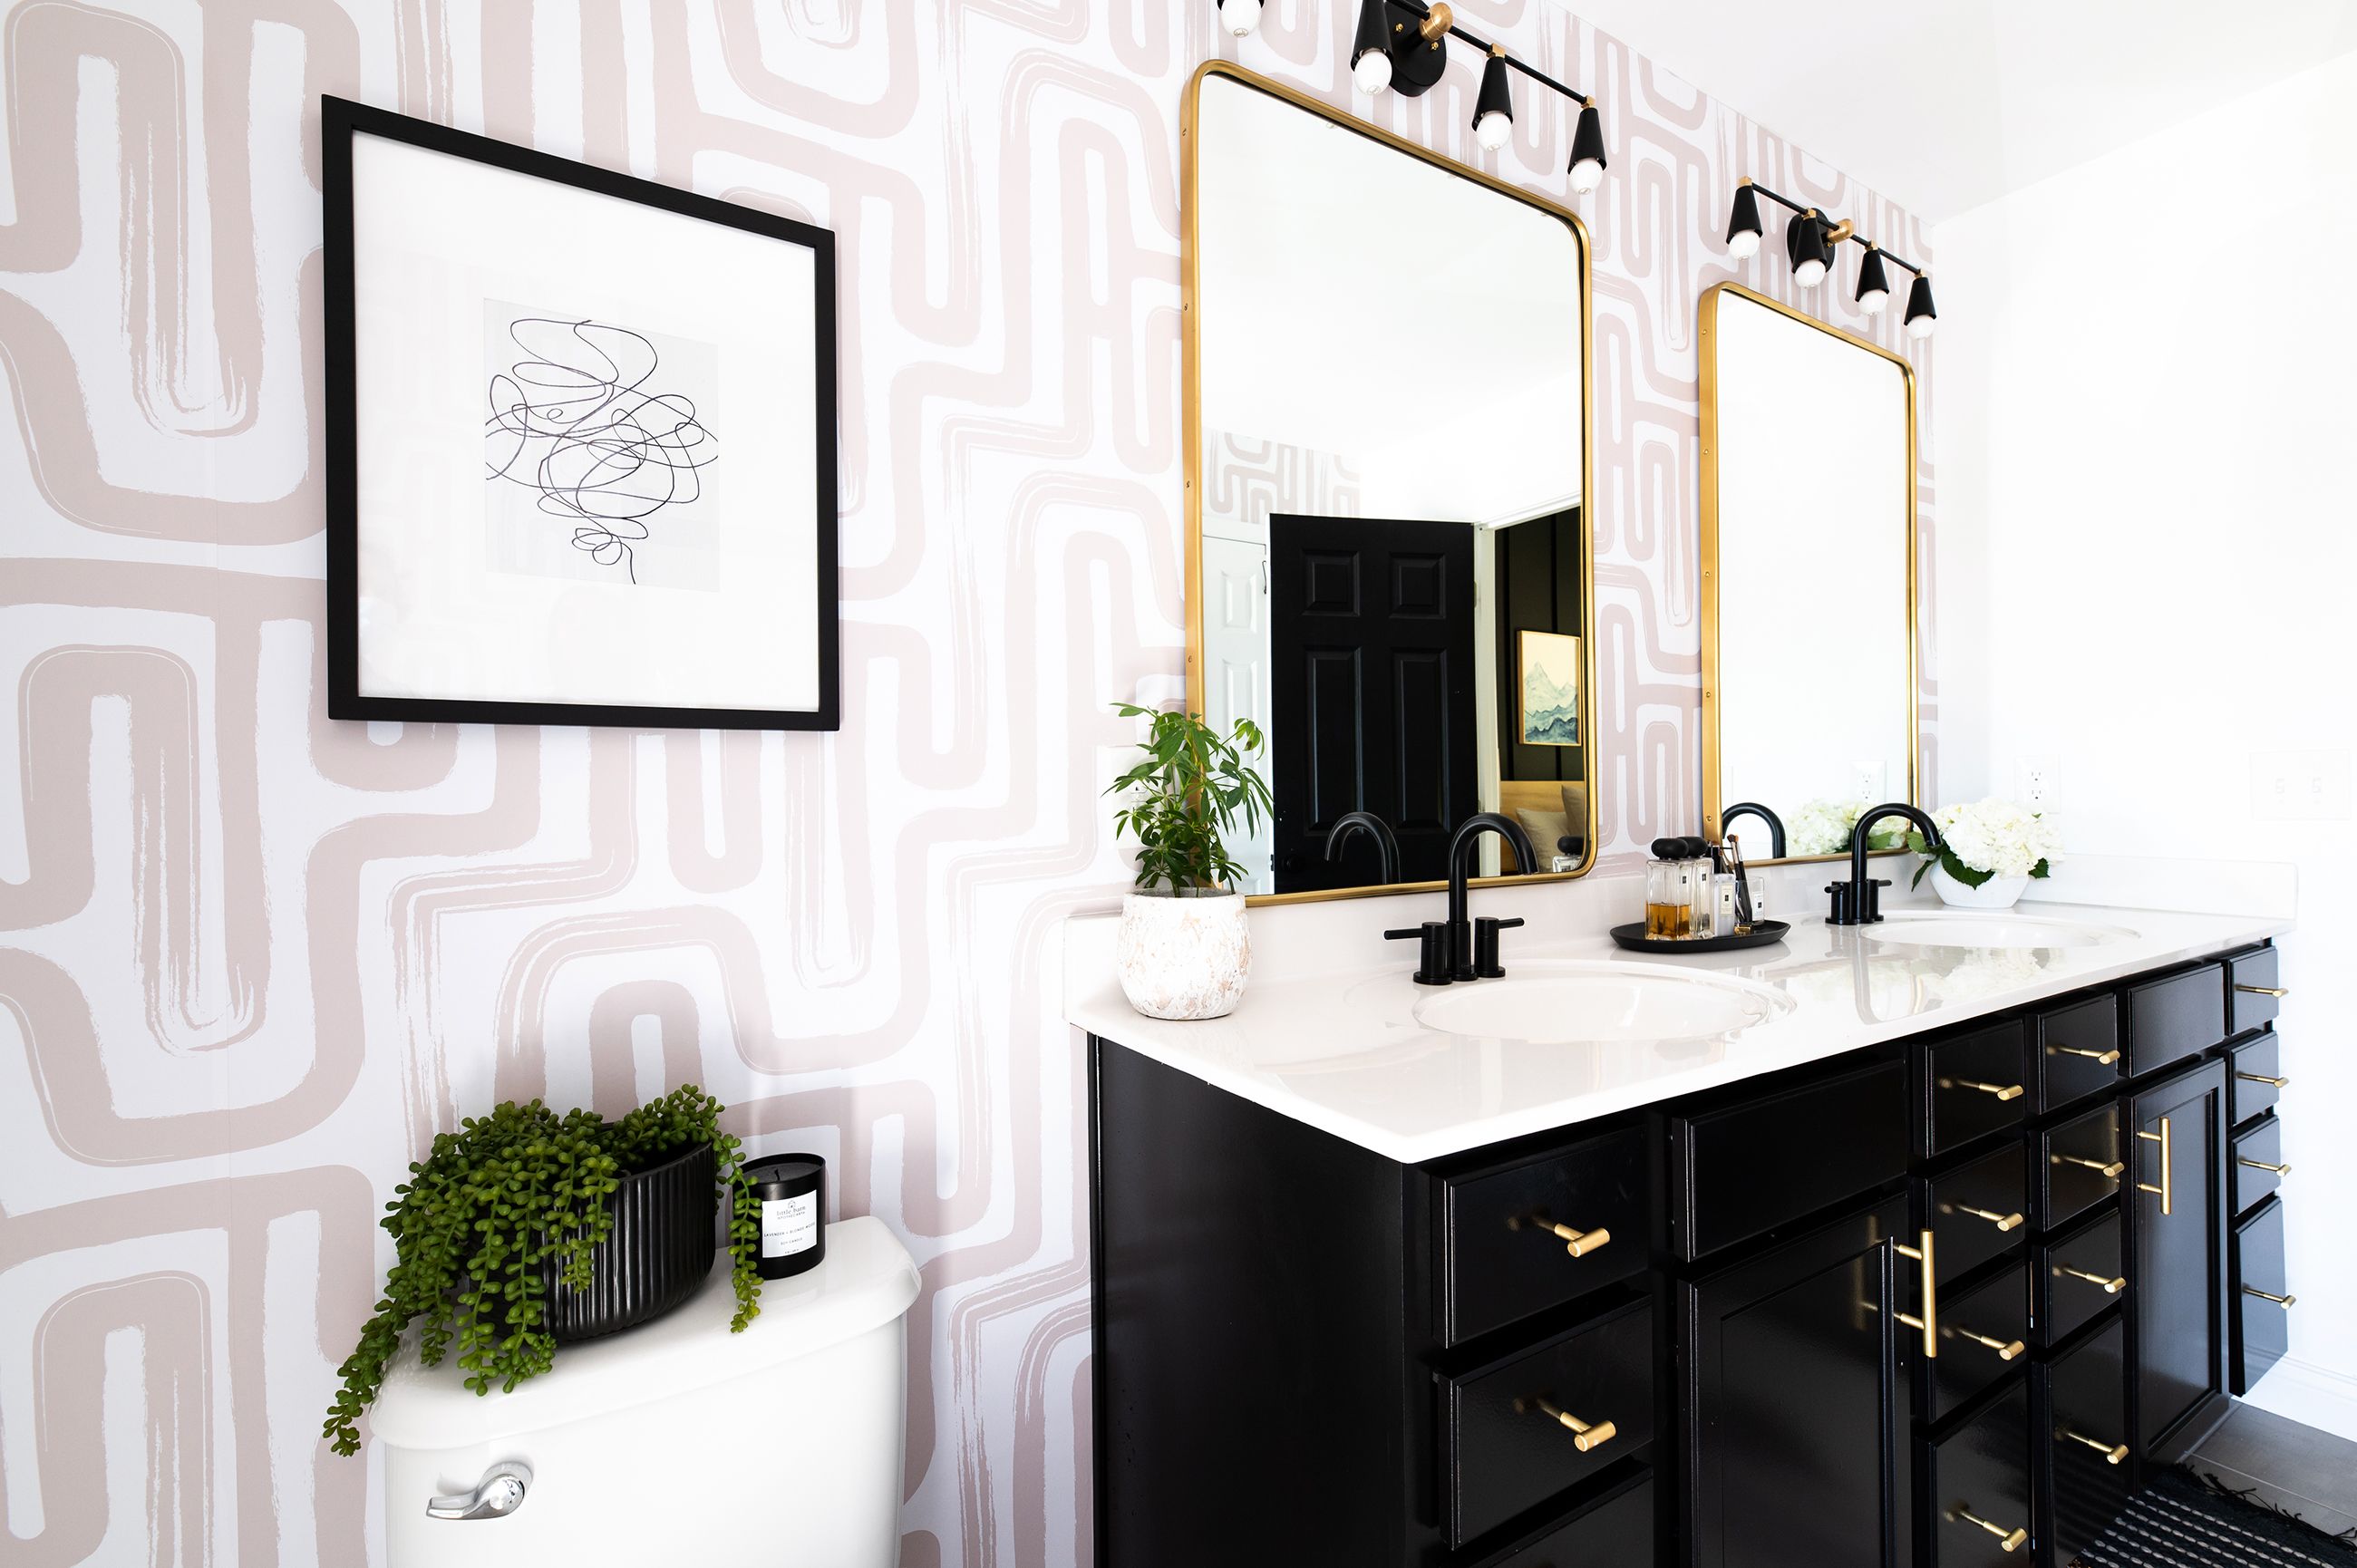 18 Bathroom Decorating Ideas   Pictures of Bathroom Decor and Designs